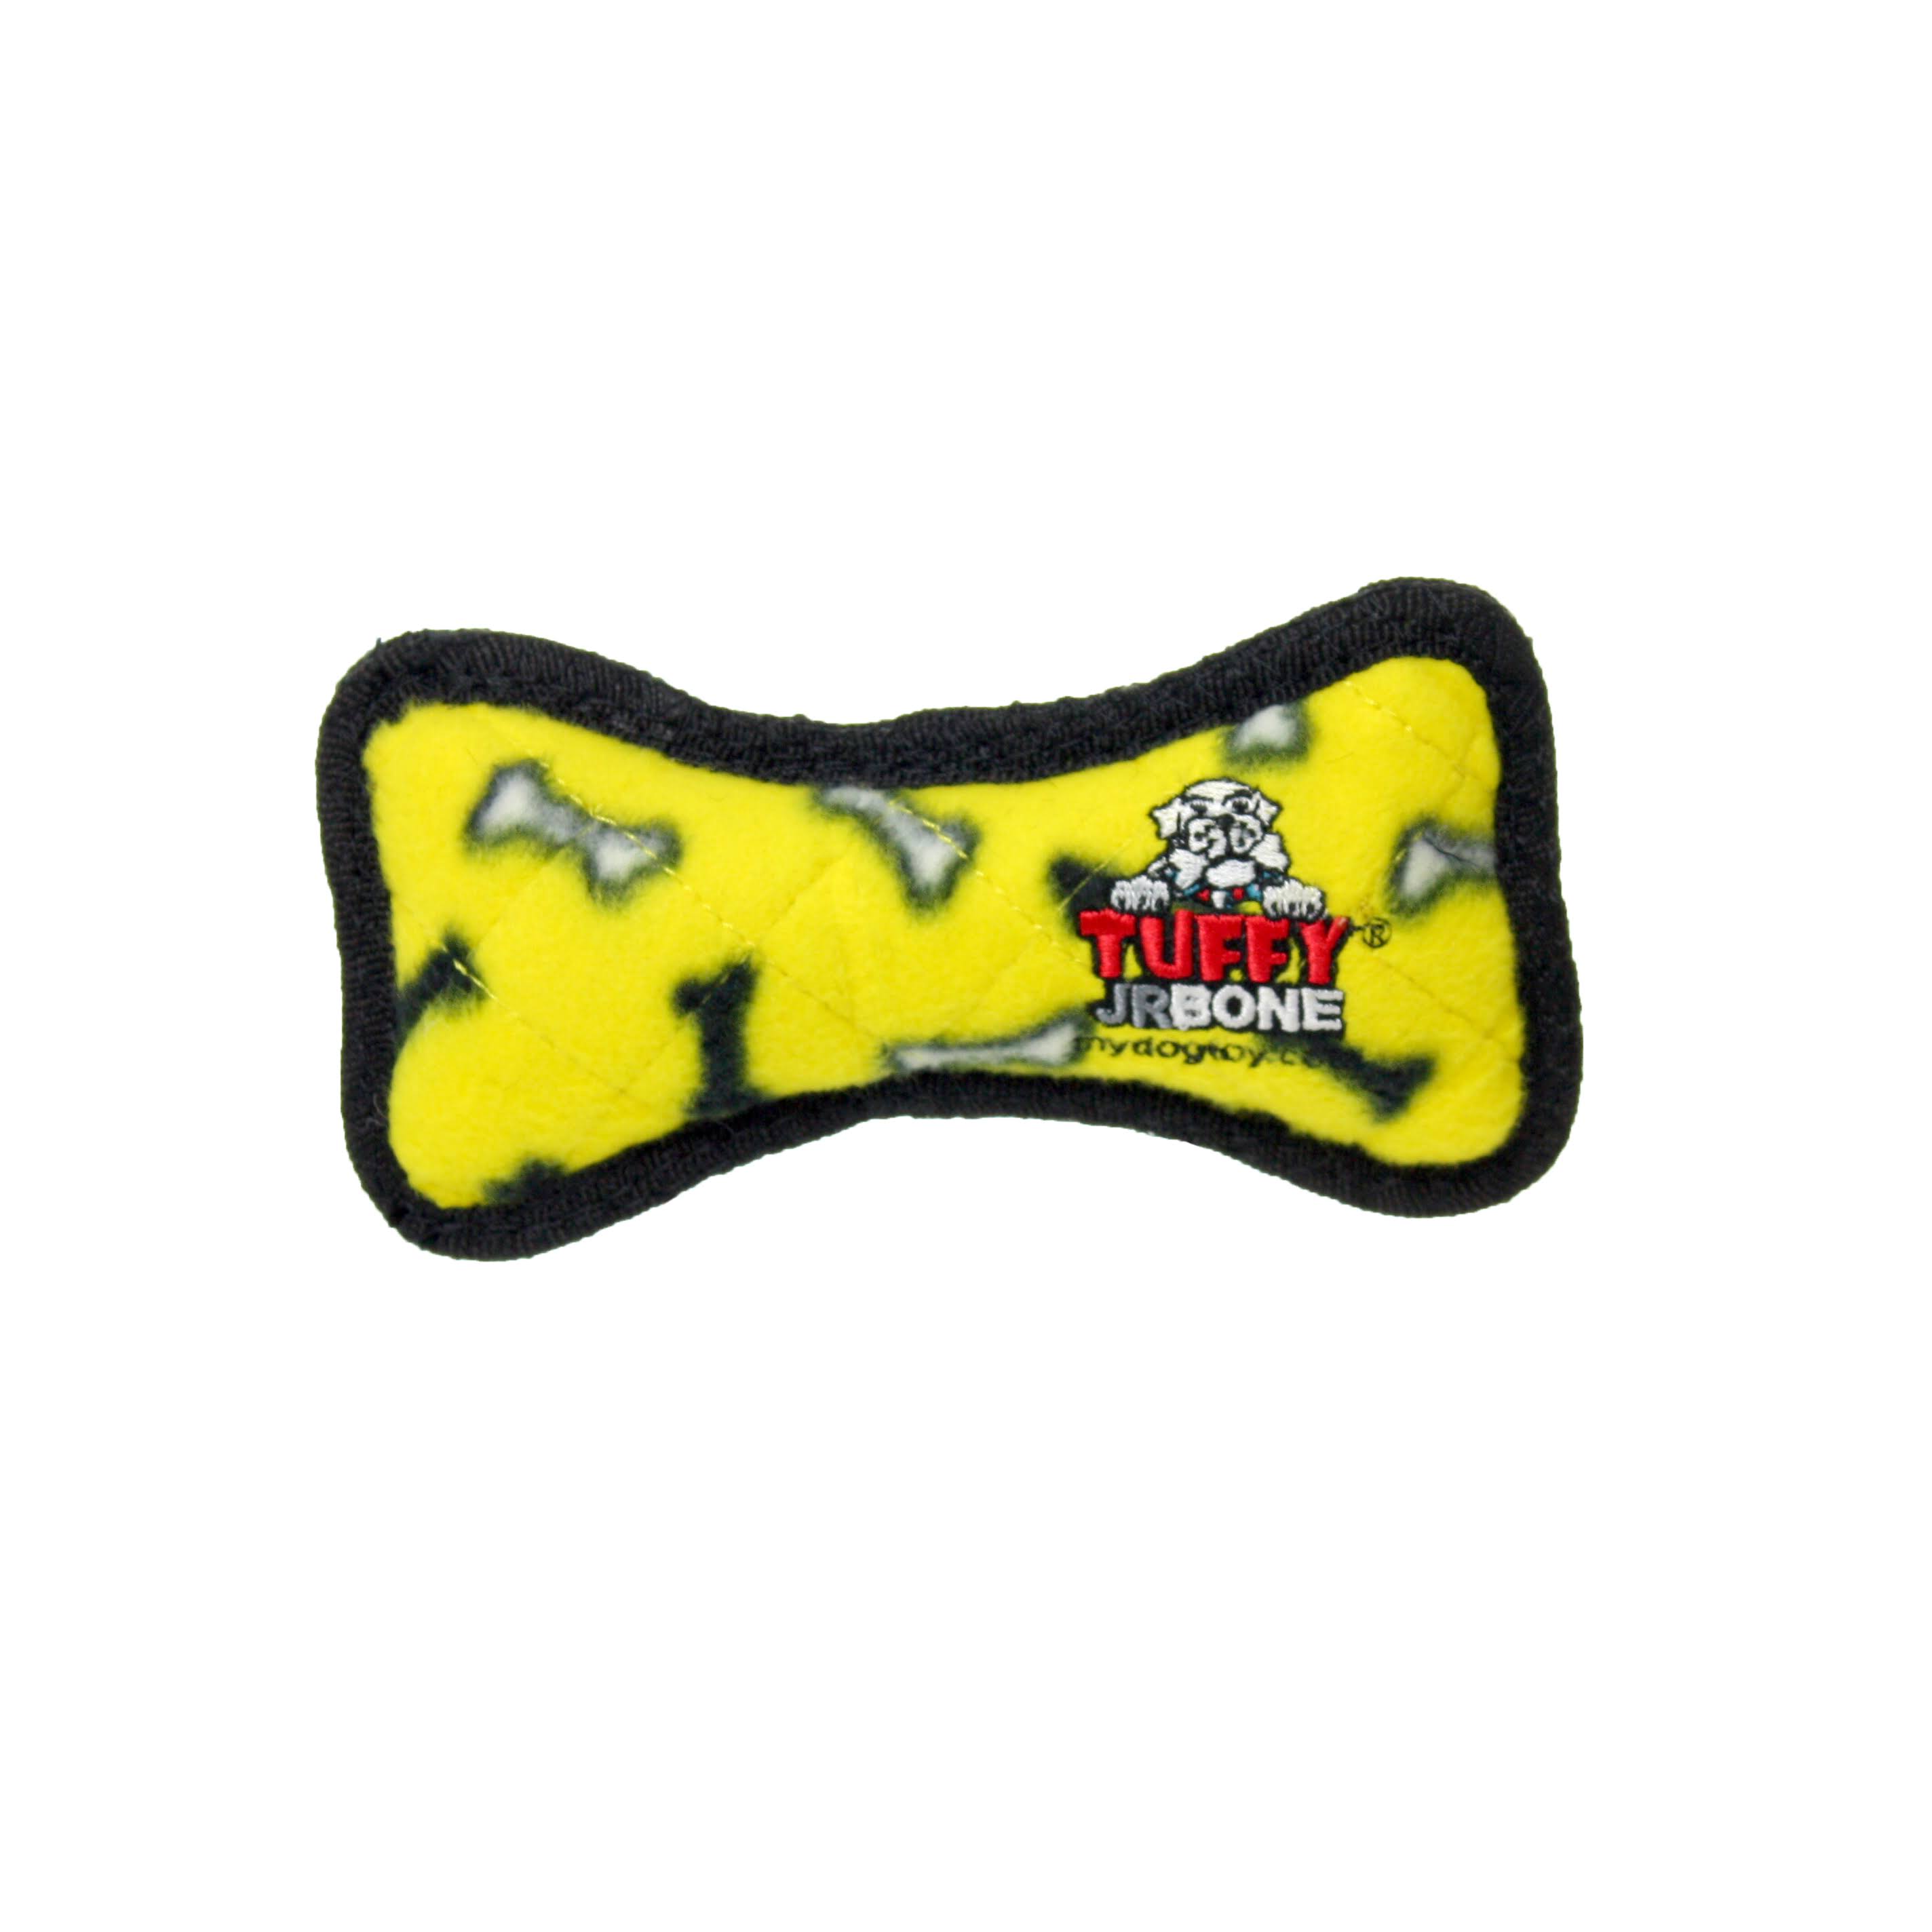 Tuffy's Junior Bone Dog Toy - Yellow Bone